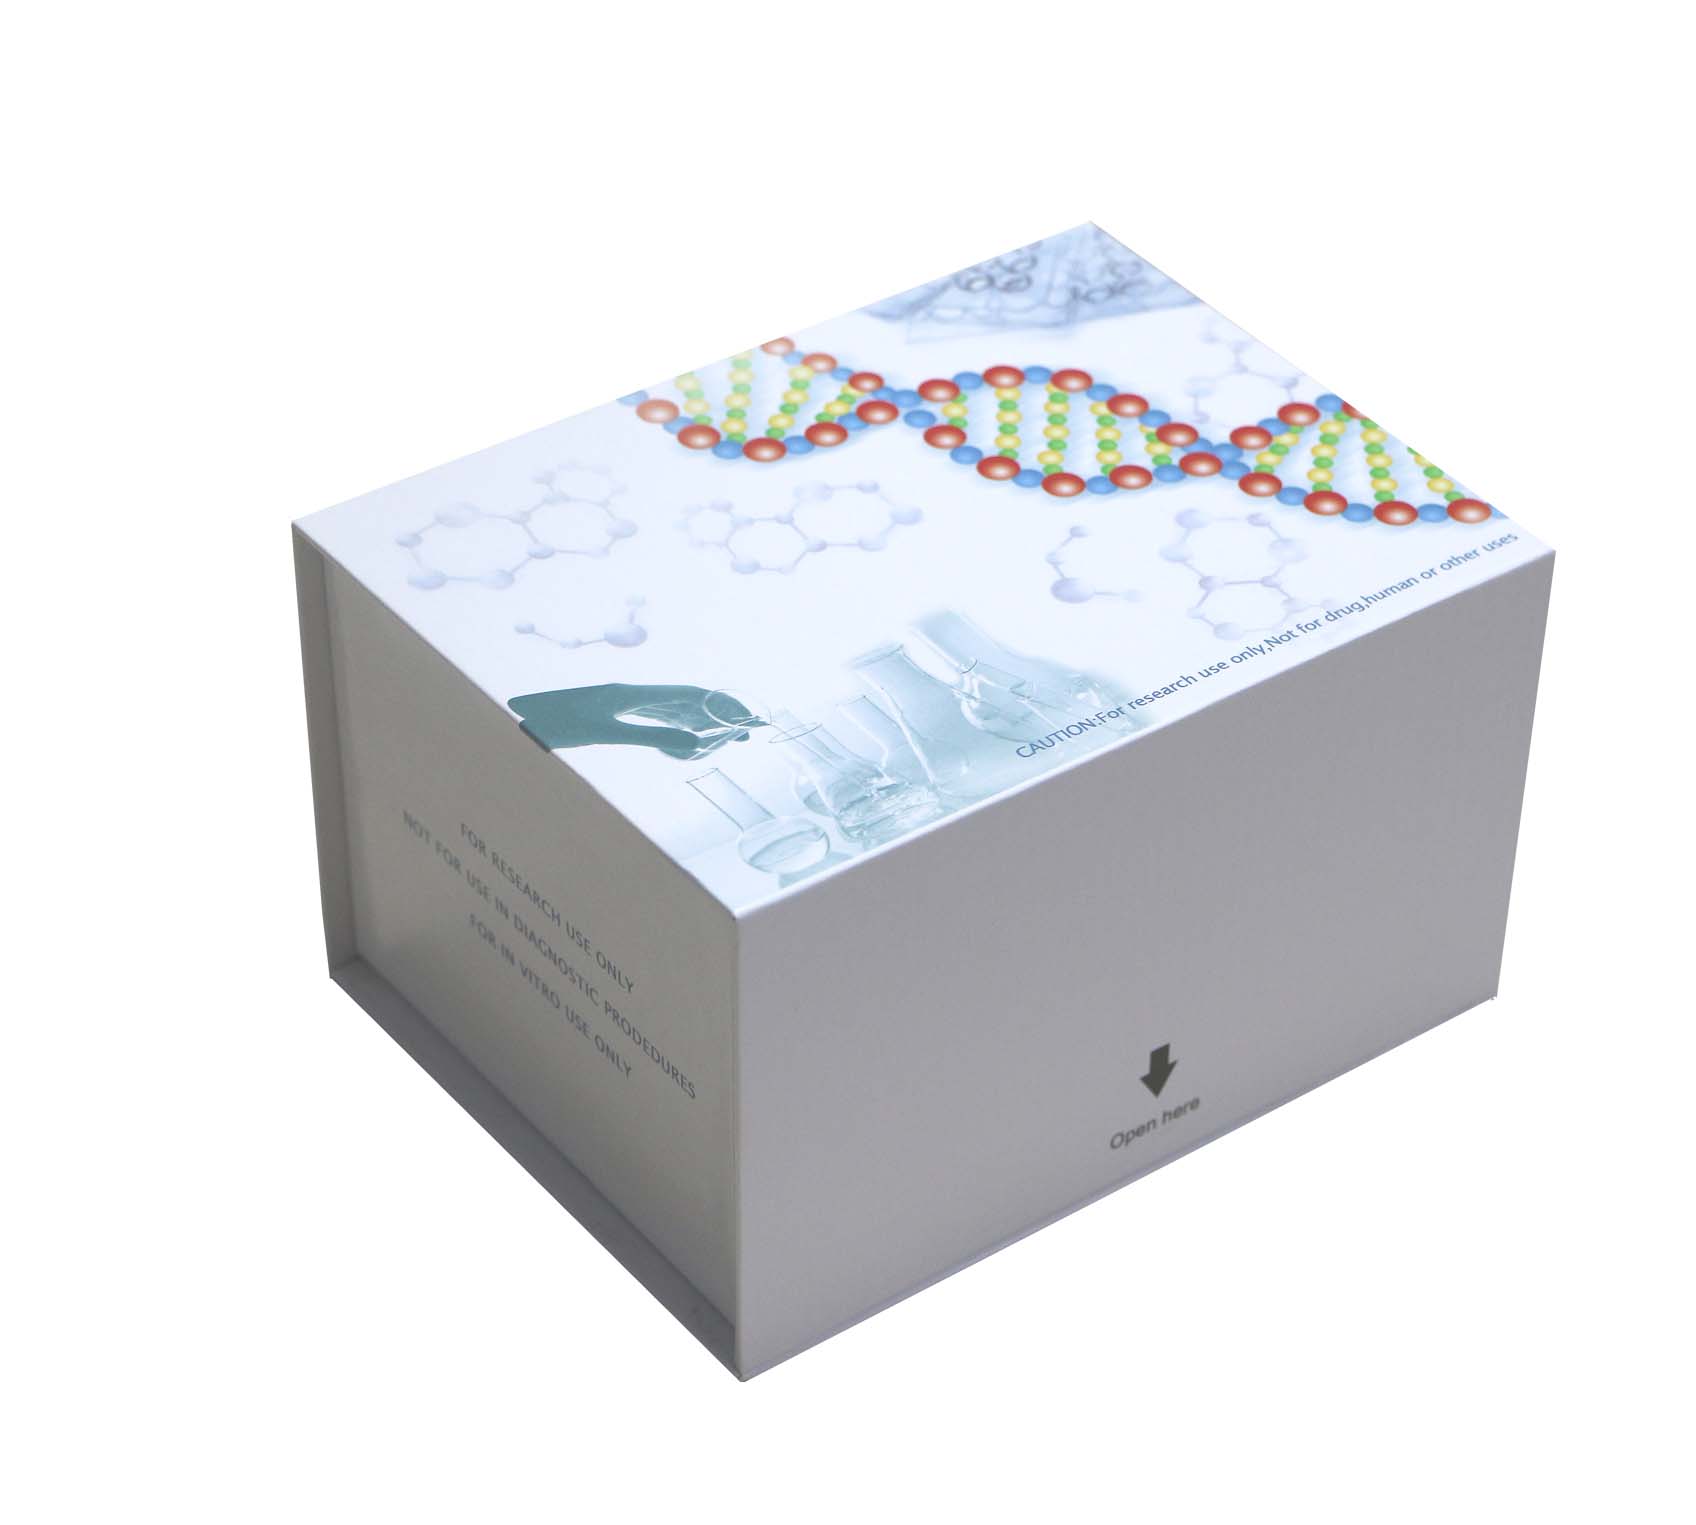 人纤连蛋白(FN)ELISA测定试剂盒